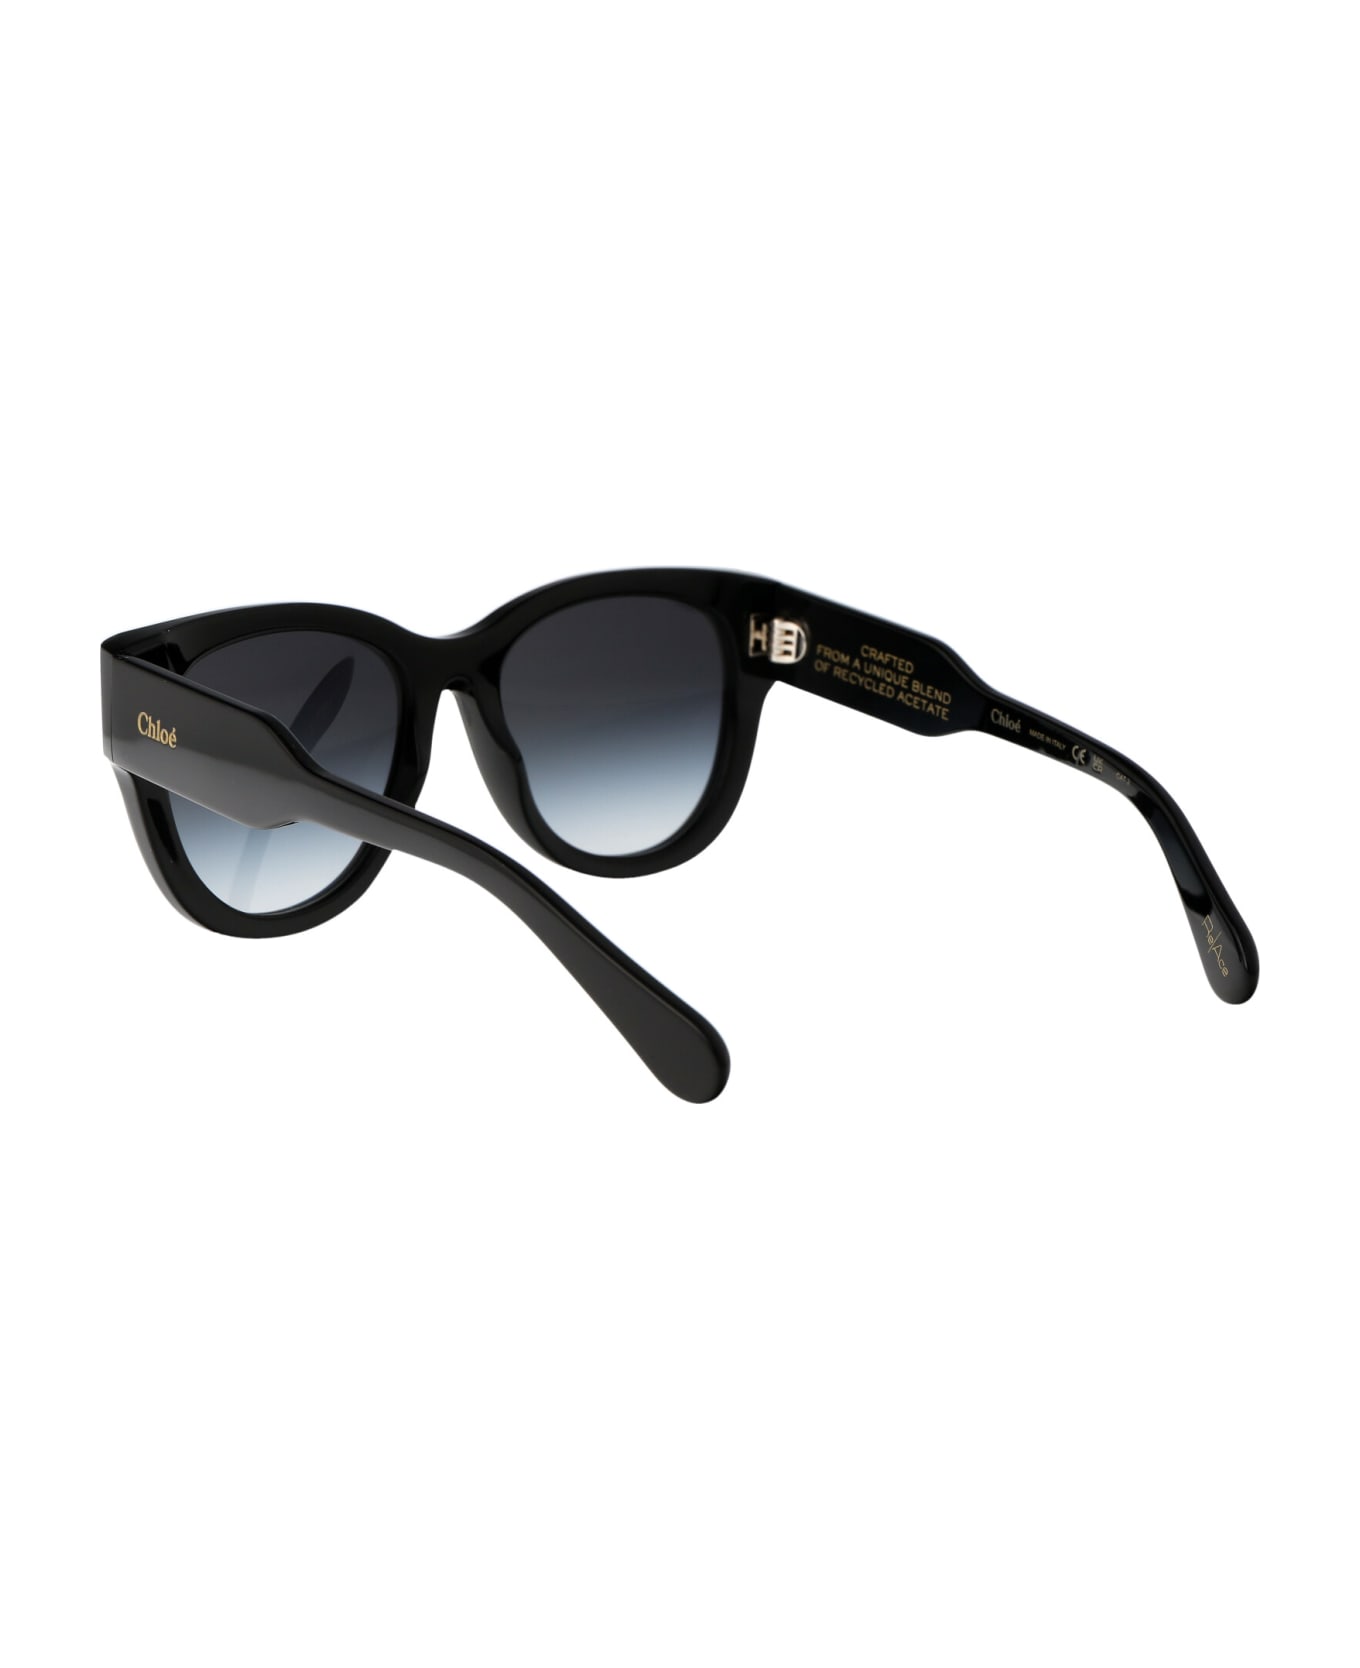 Chloé Eyewear Ch0192s Sunglasses - 001 BLACK BLACK GREY